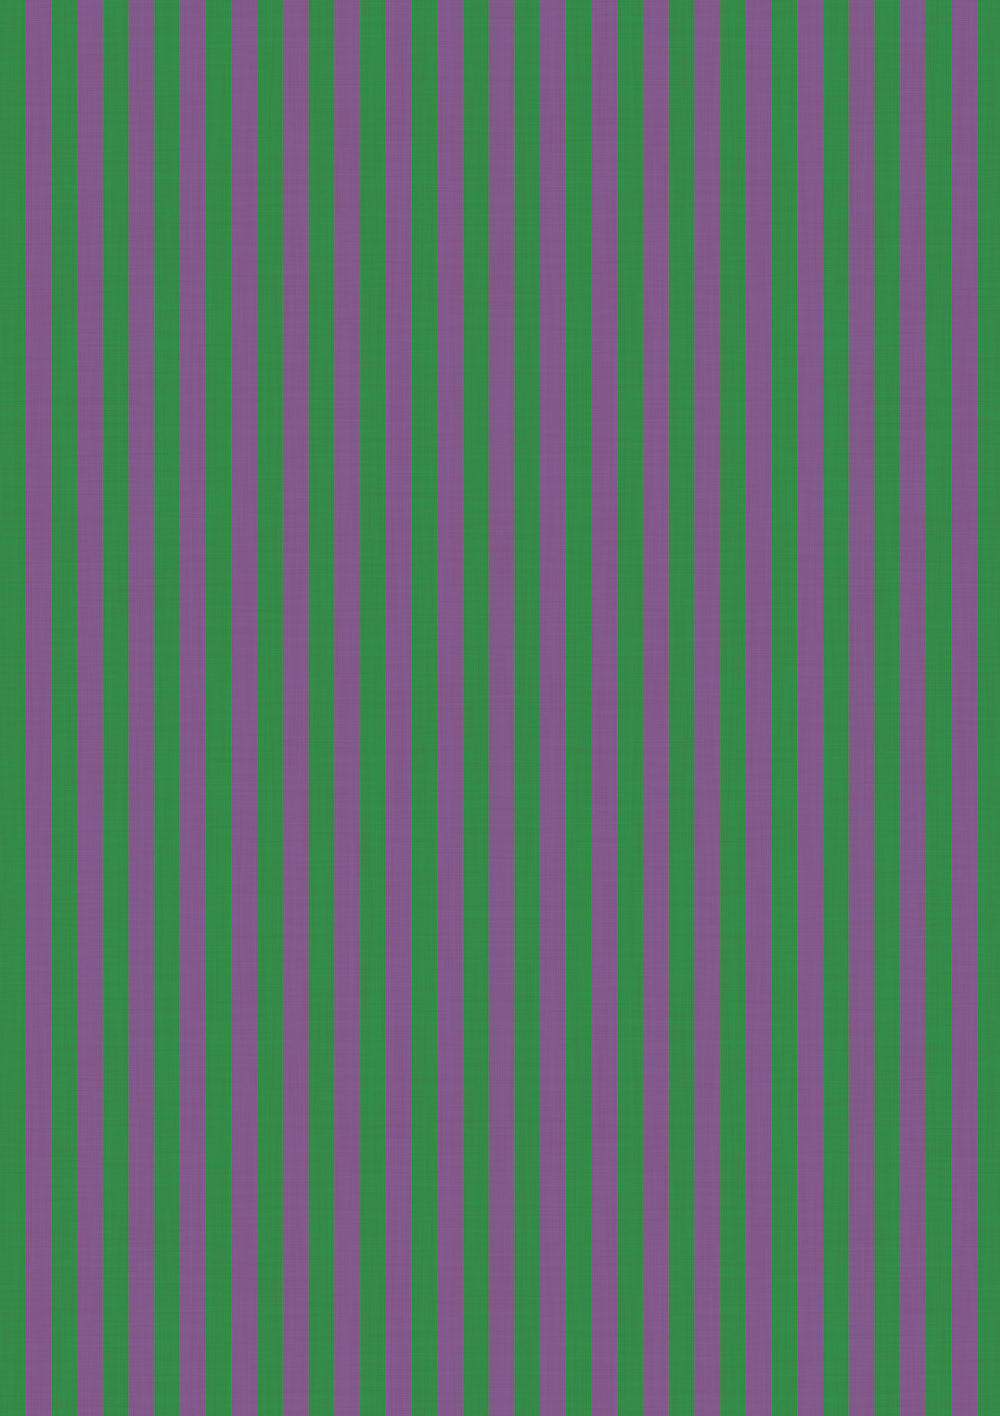 305. Custom. Stripe pattern photography backdrop